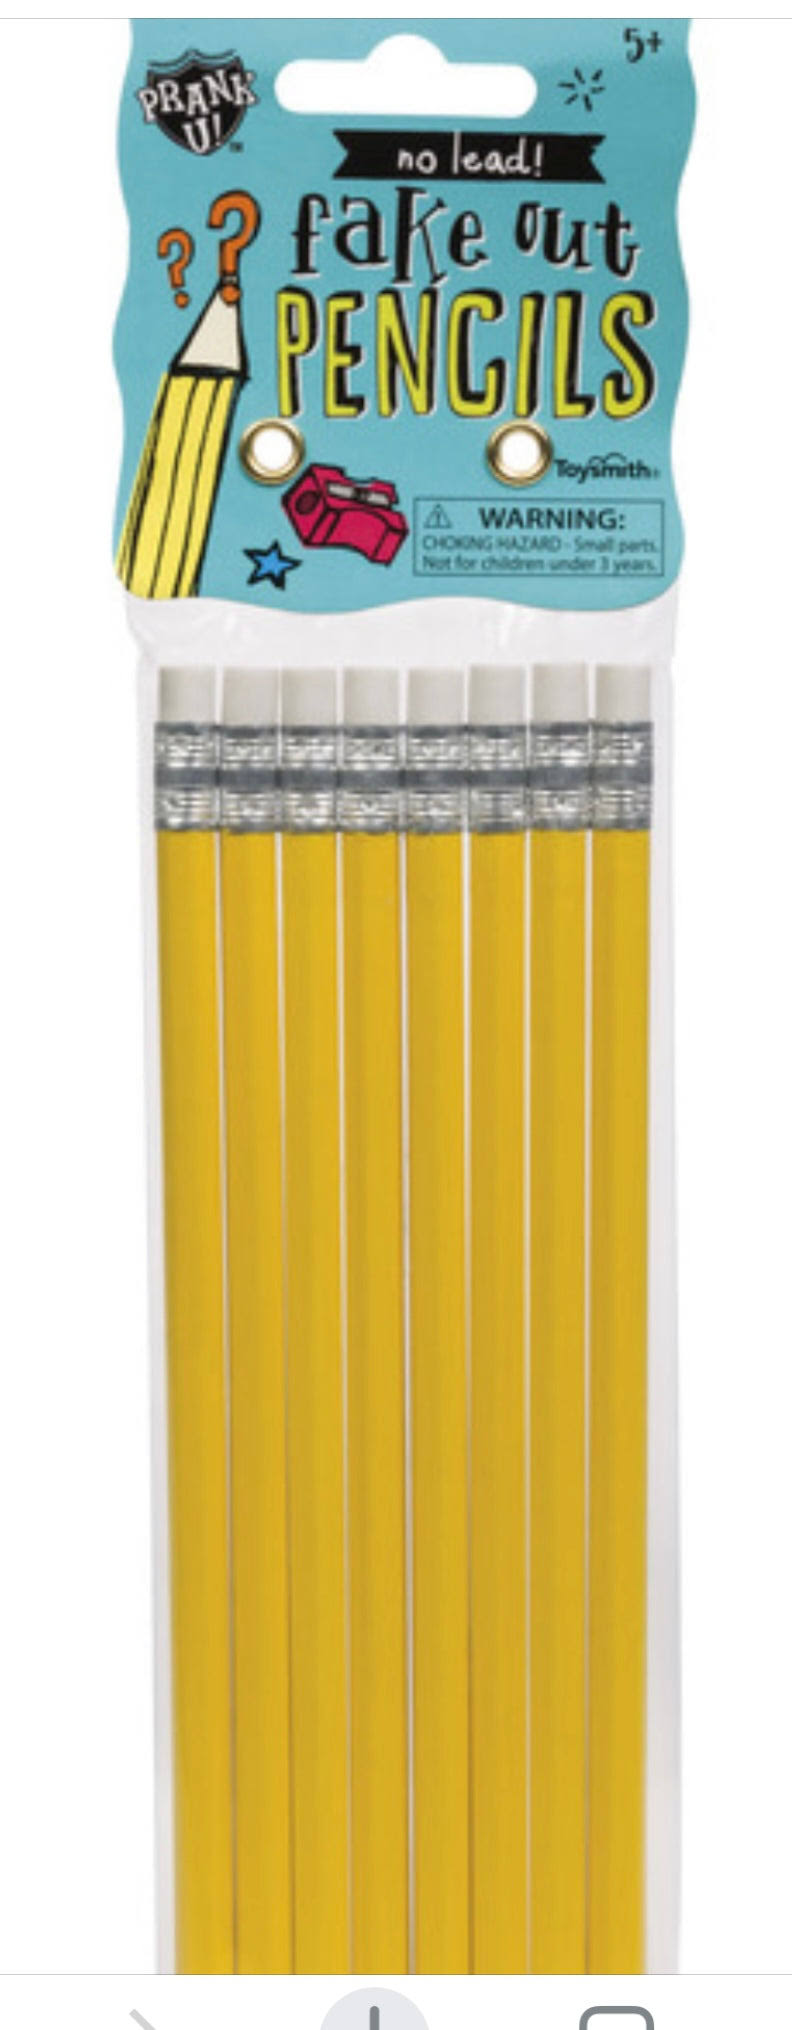 Toysmith Fake Out Pencils